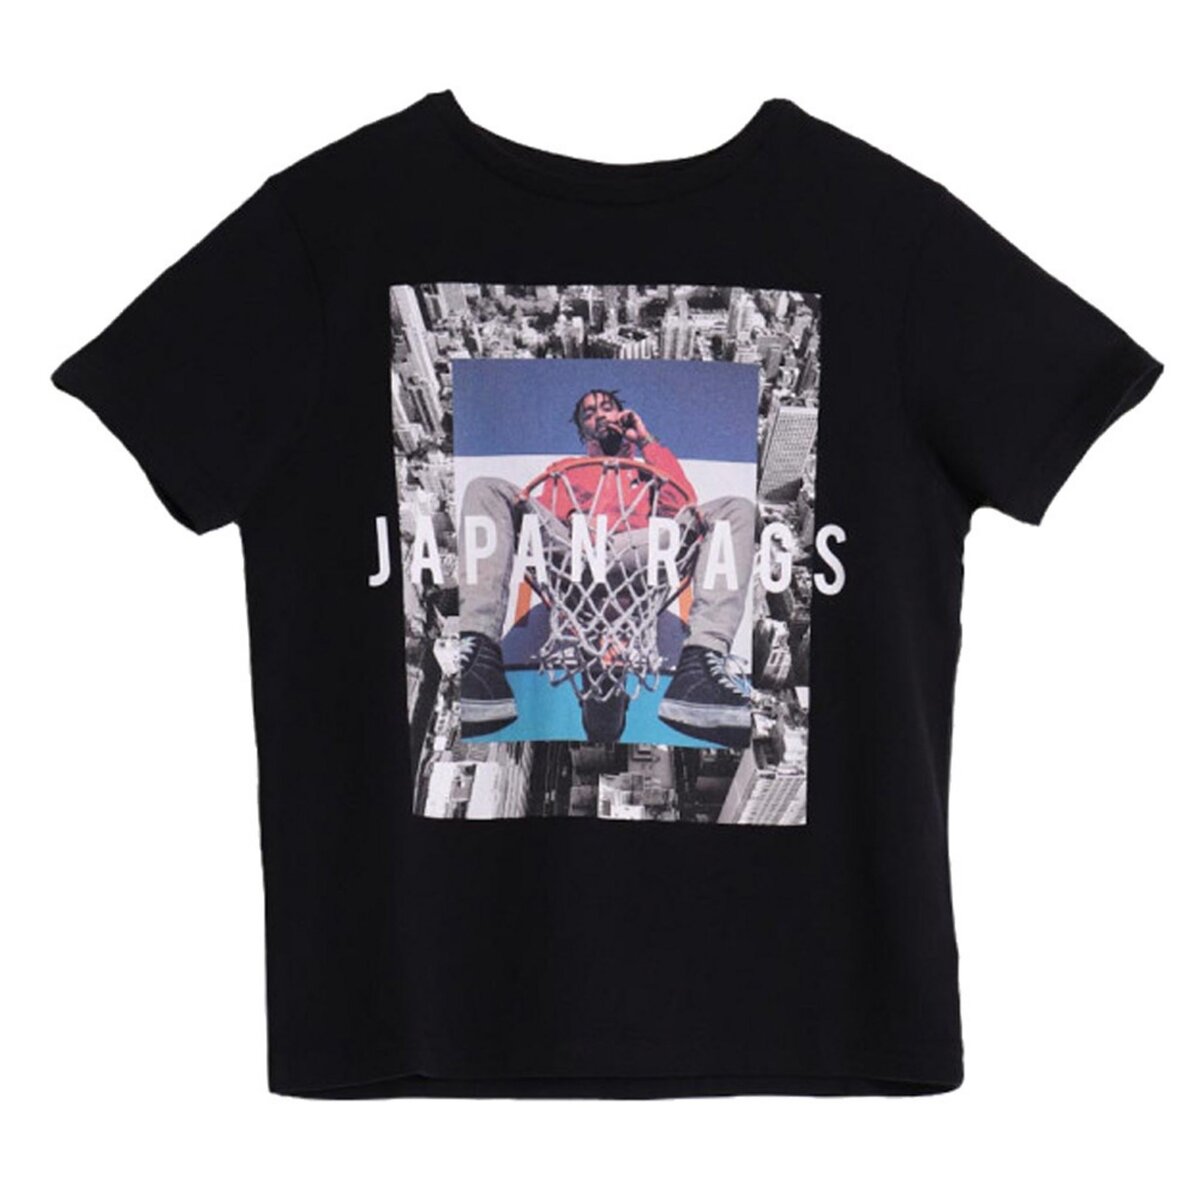  T-shirt noir garçon Japan Rags JayBo